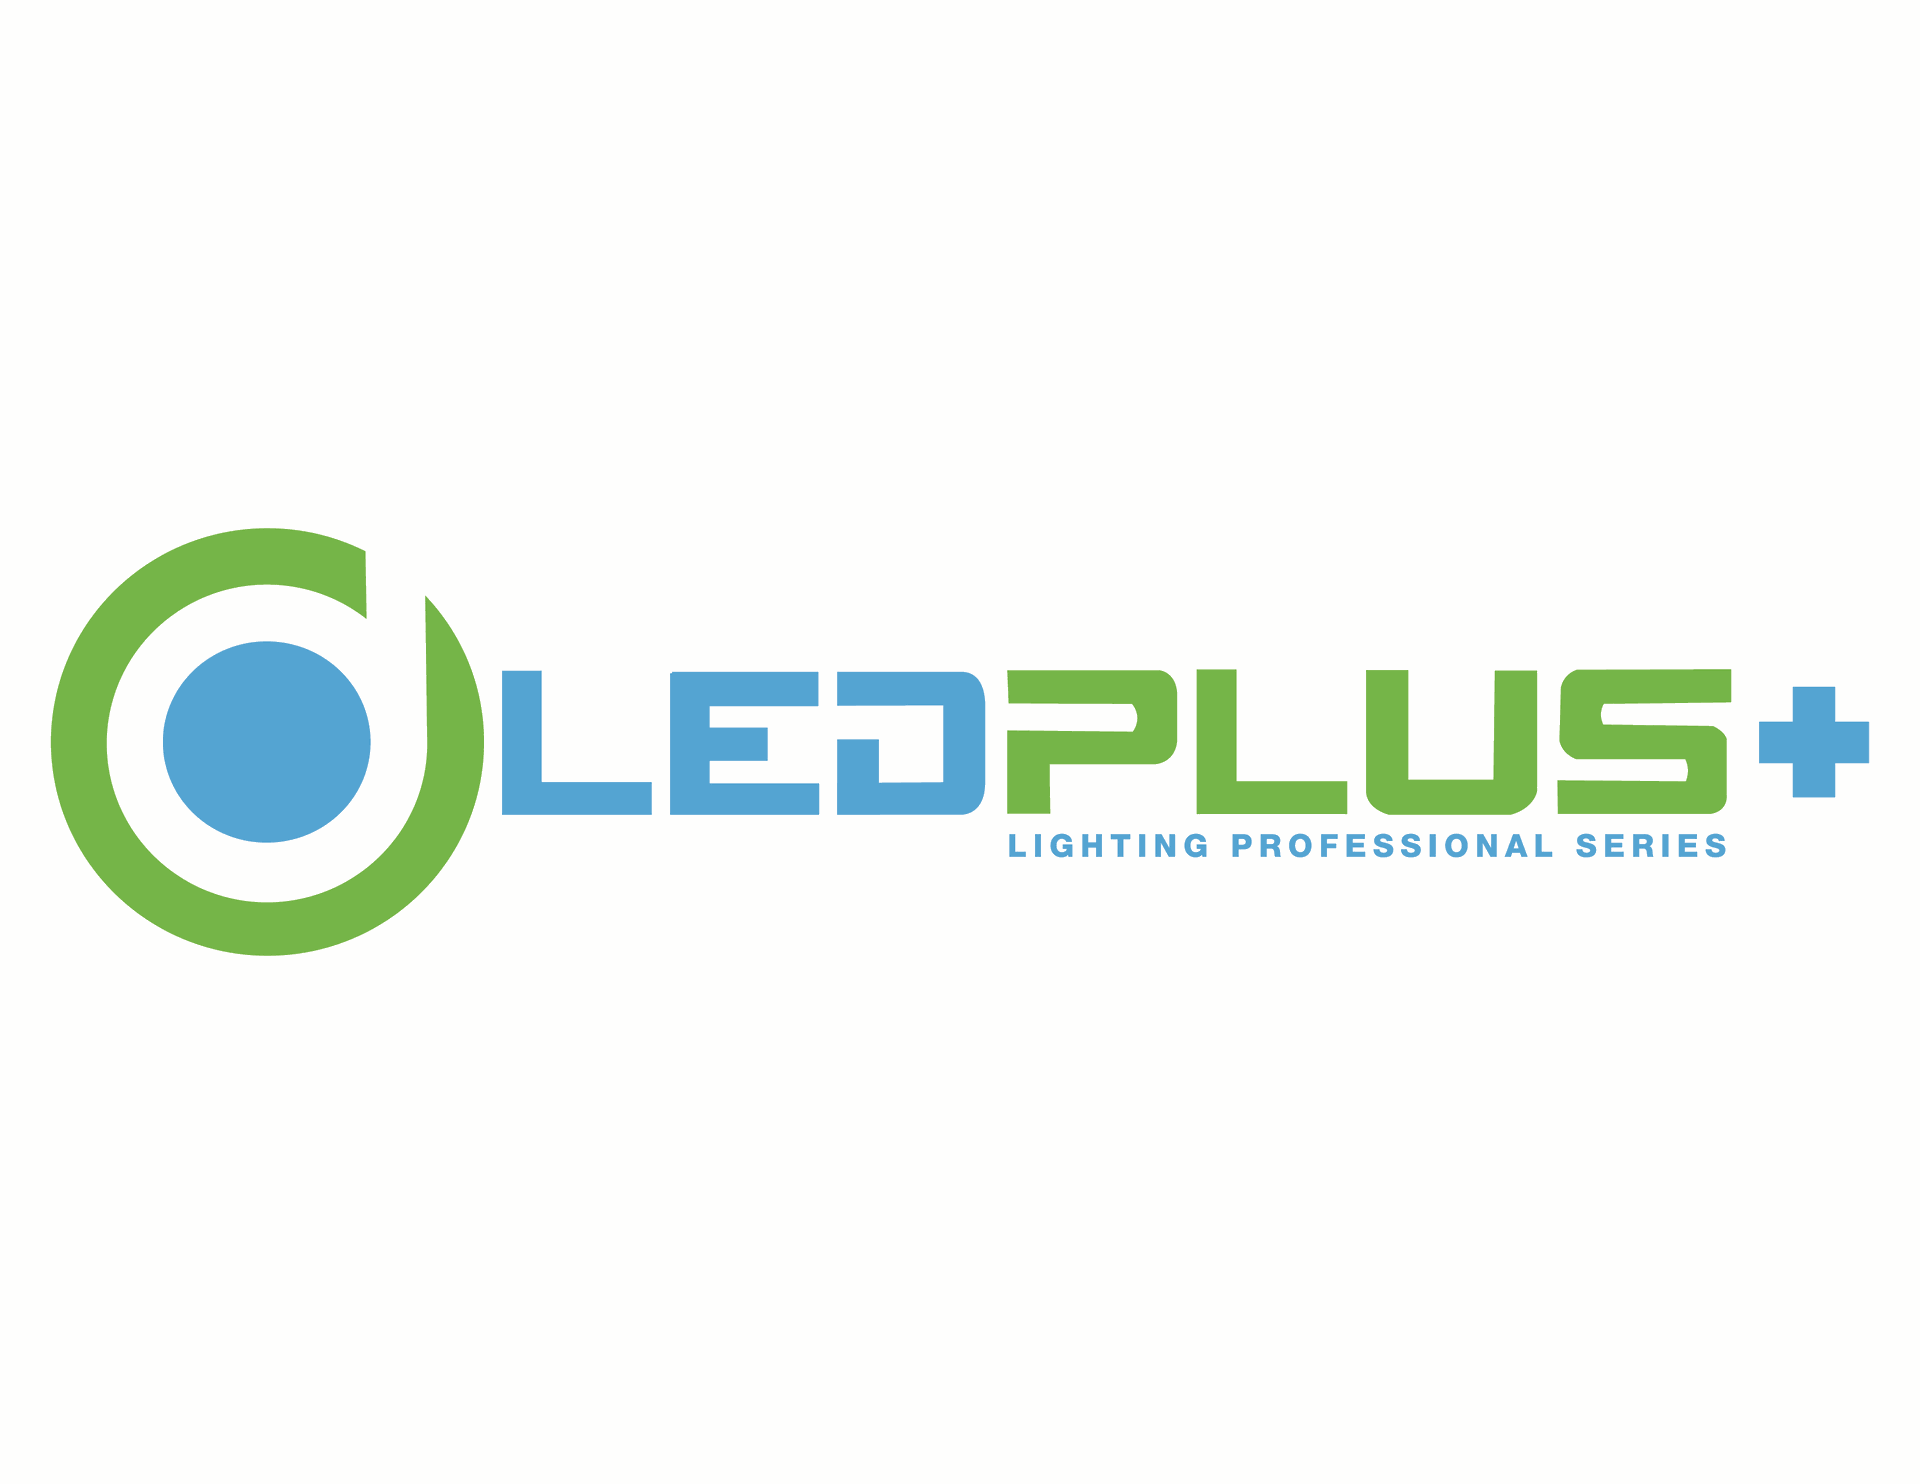 Ledplus